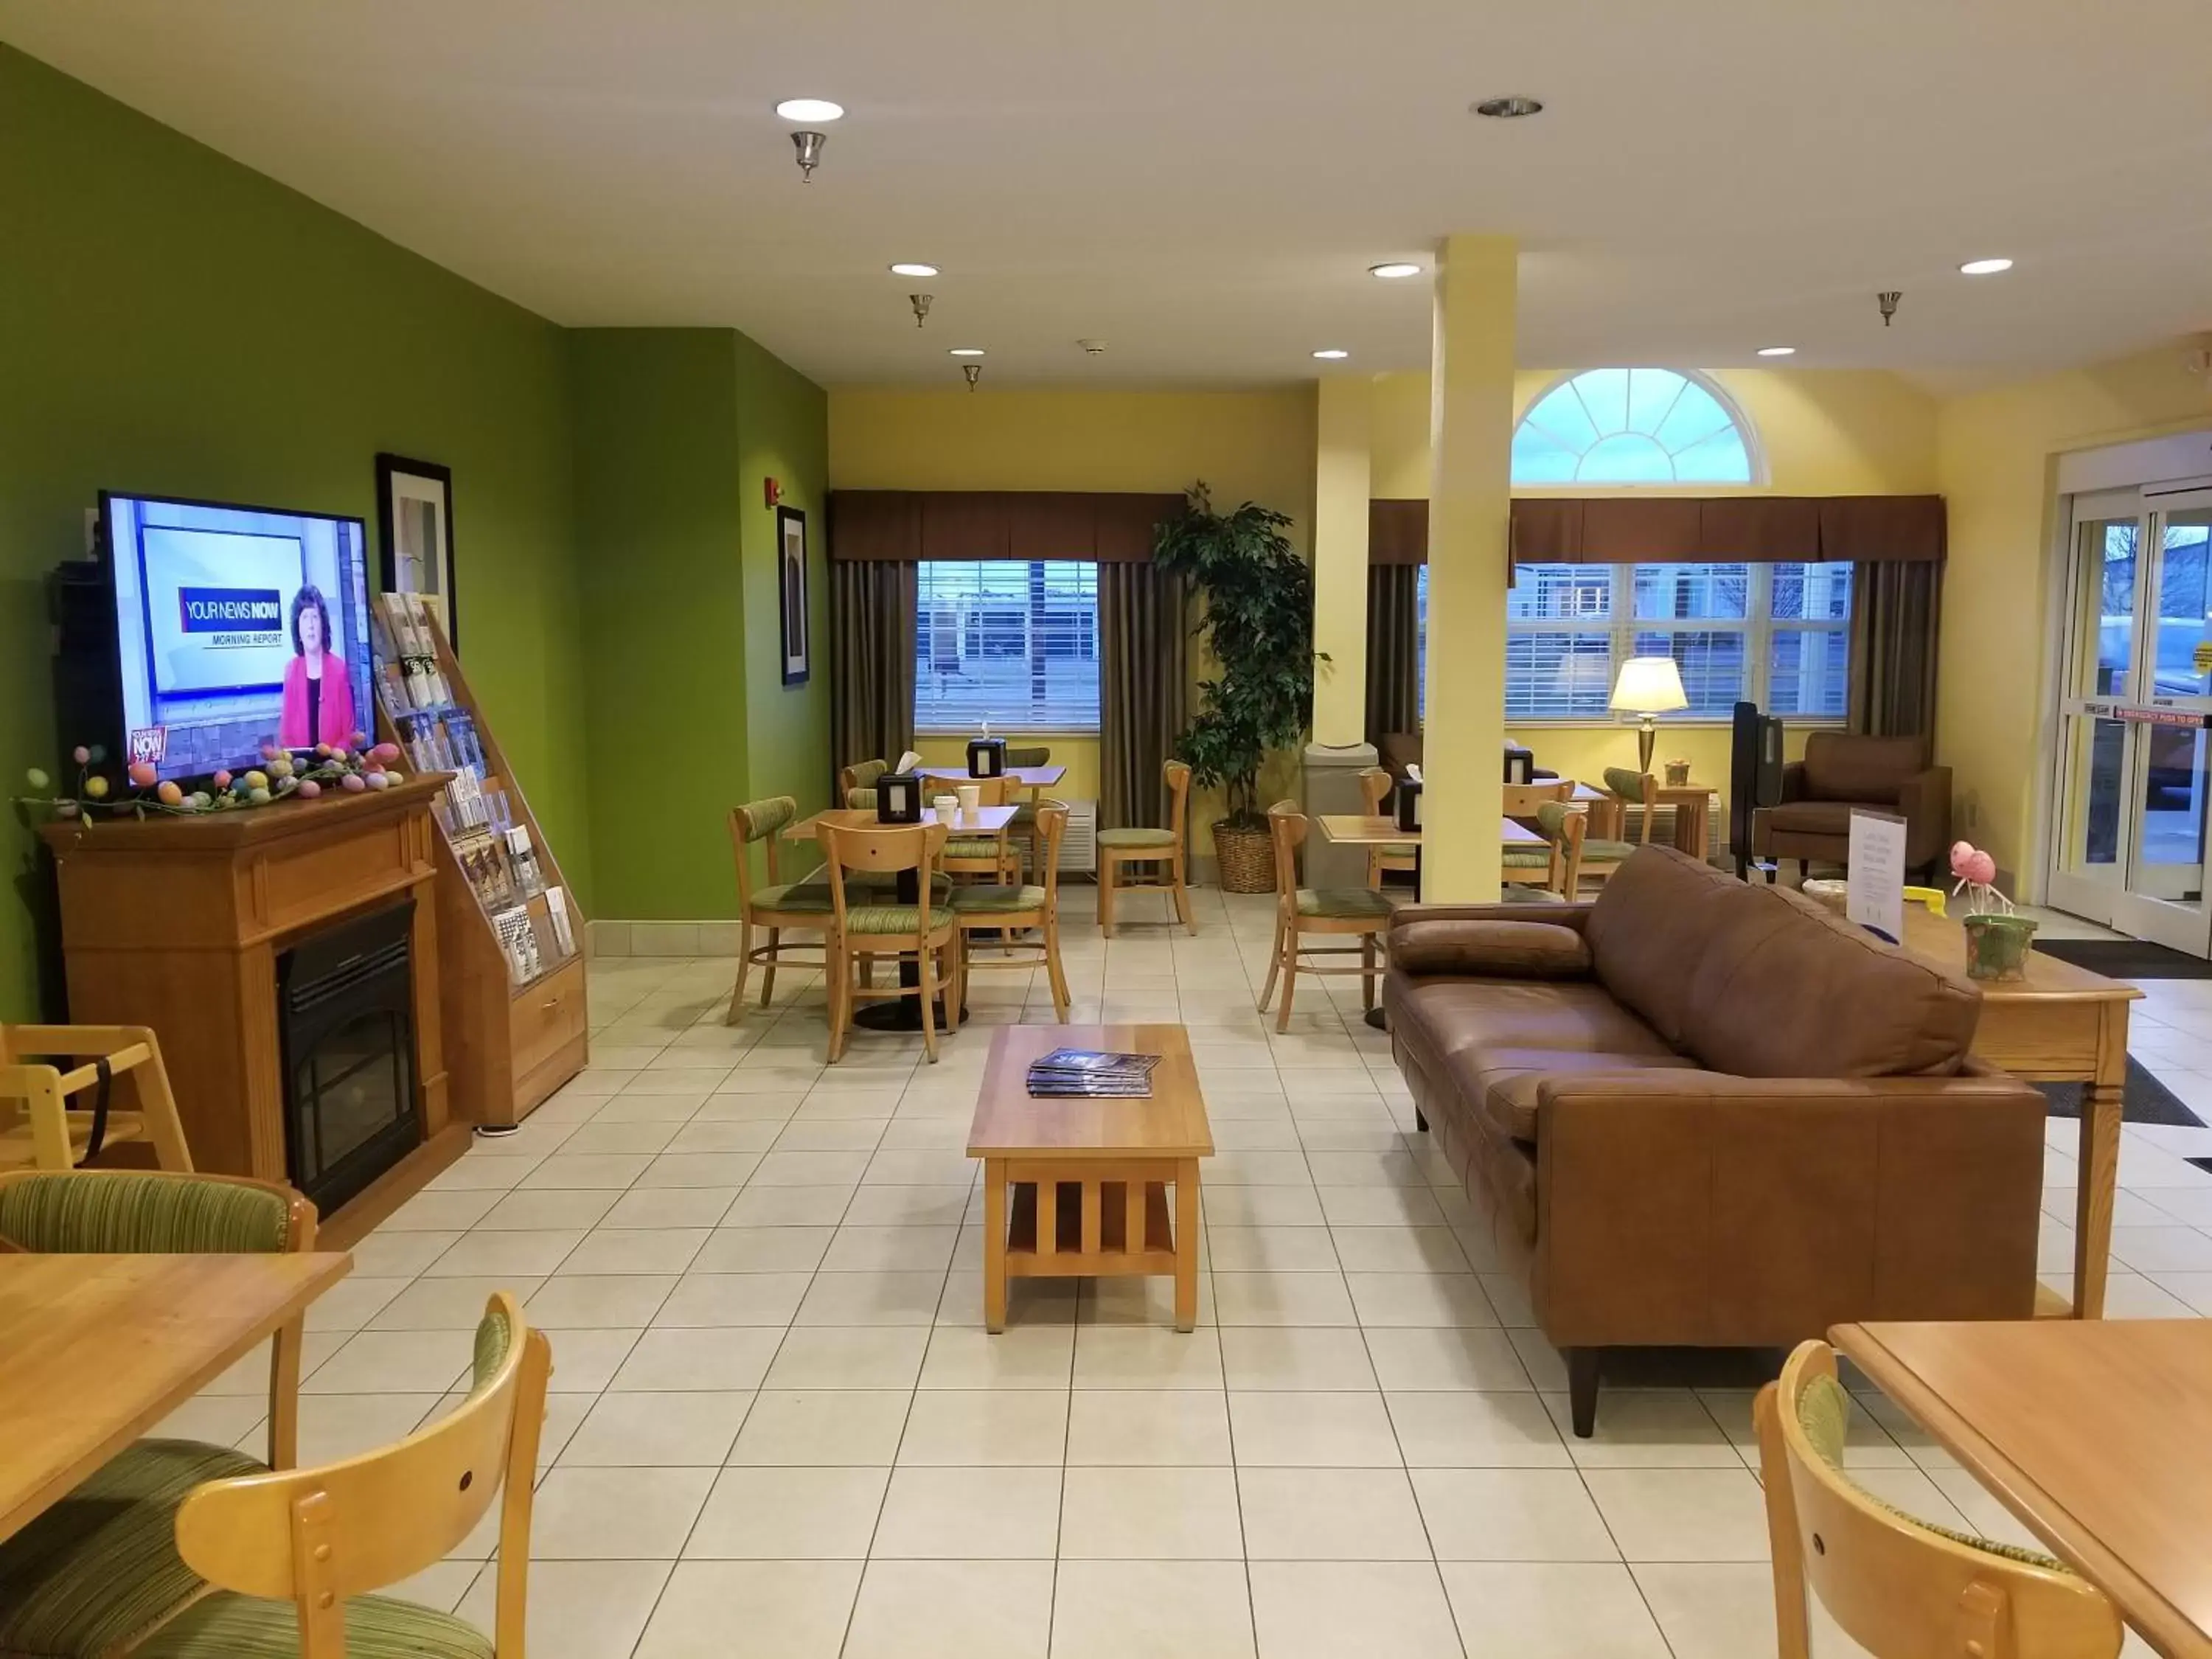 Lobby or reception in Microtel Inn & Suites by Wyndham Delphos